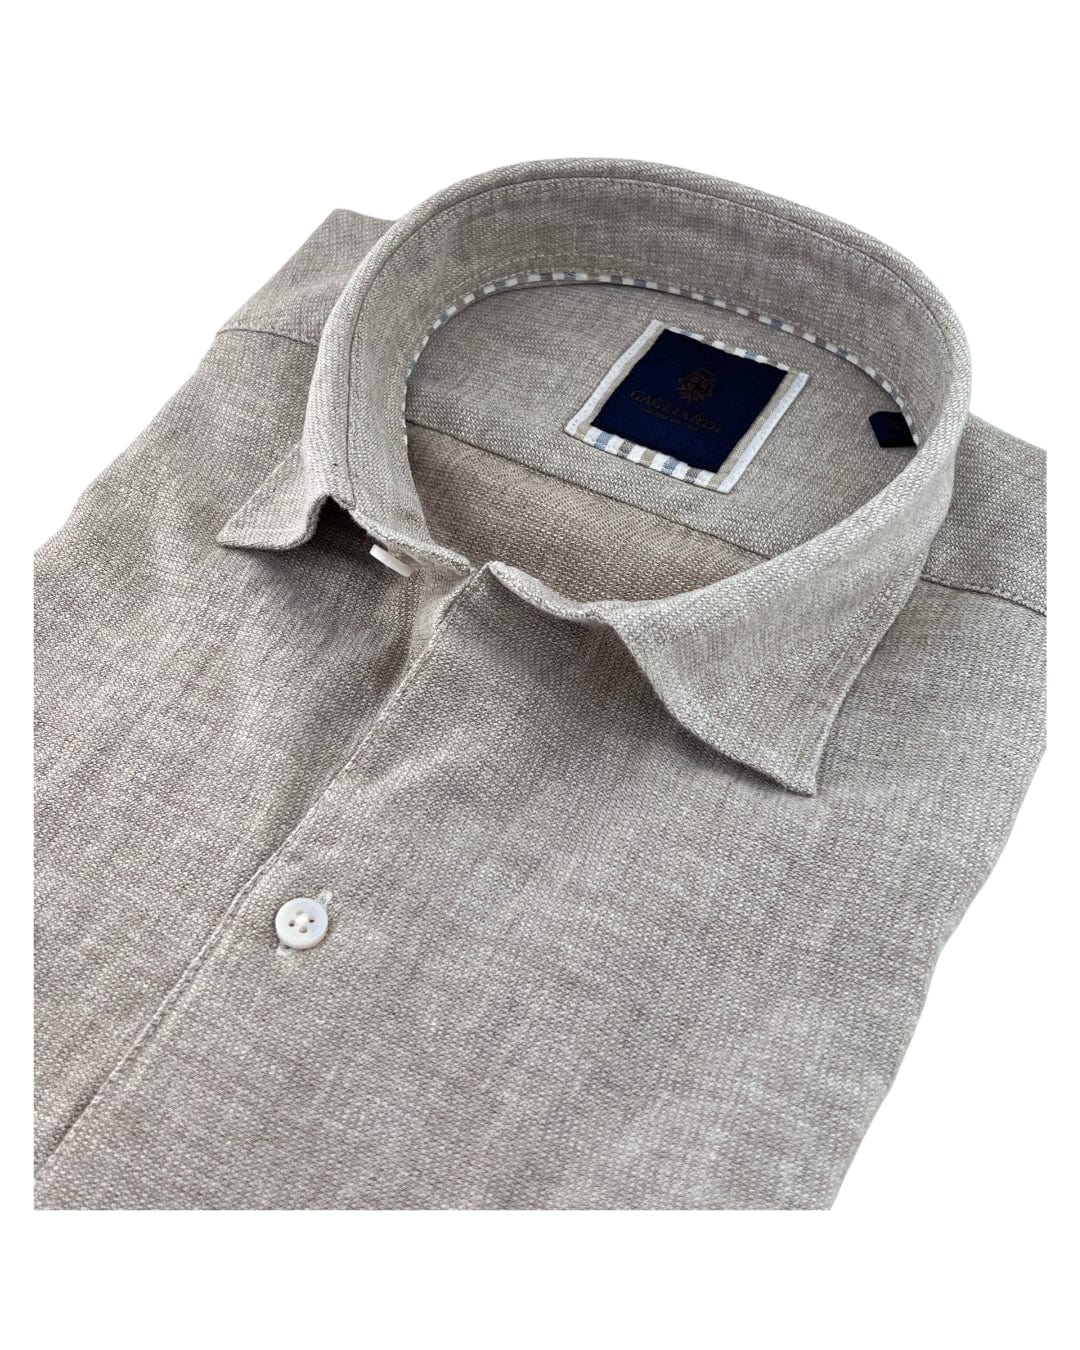 Gagliardi Shirts Gagliardi Beige Slim Fit Cotton Linen Spread Collar Shirt